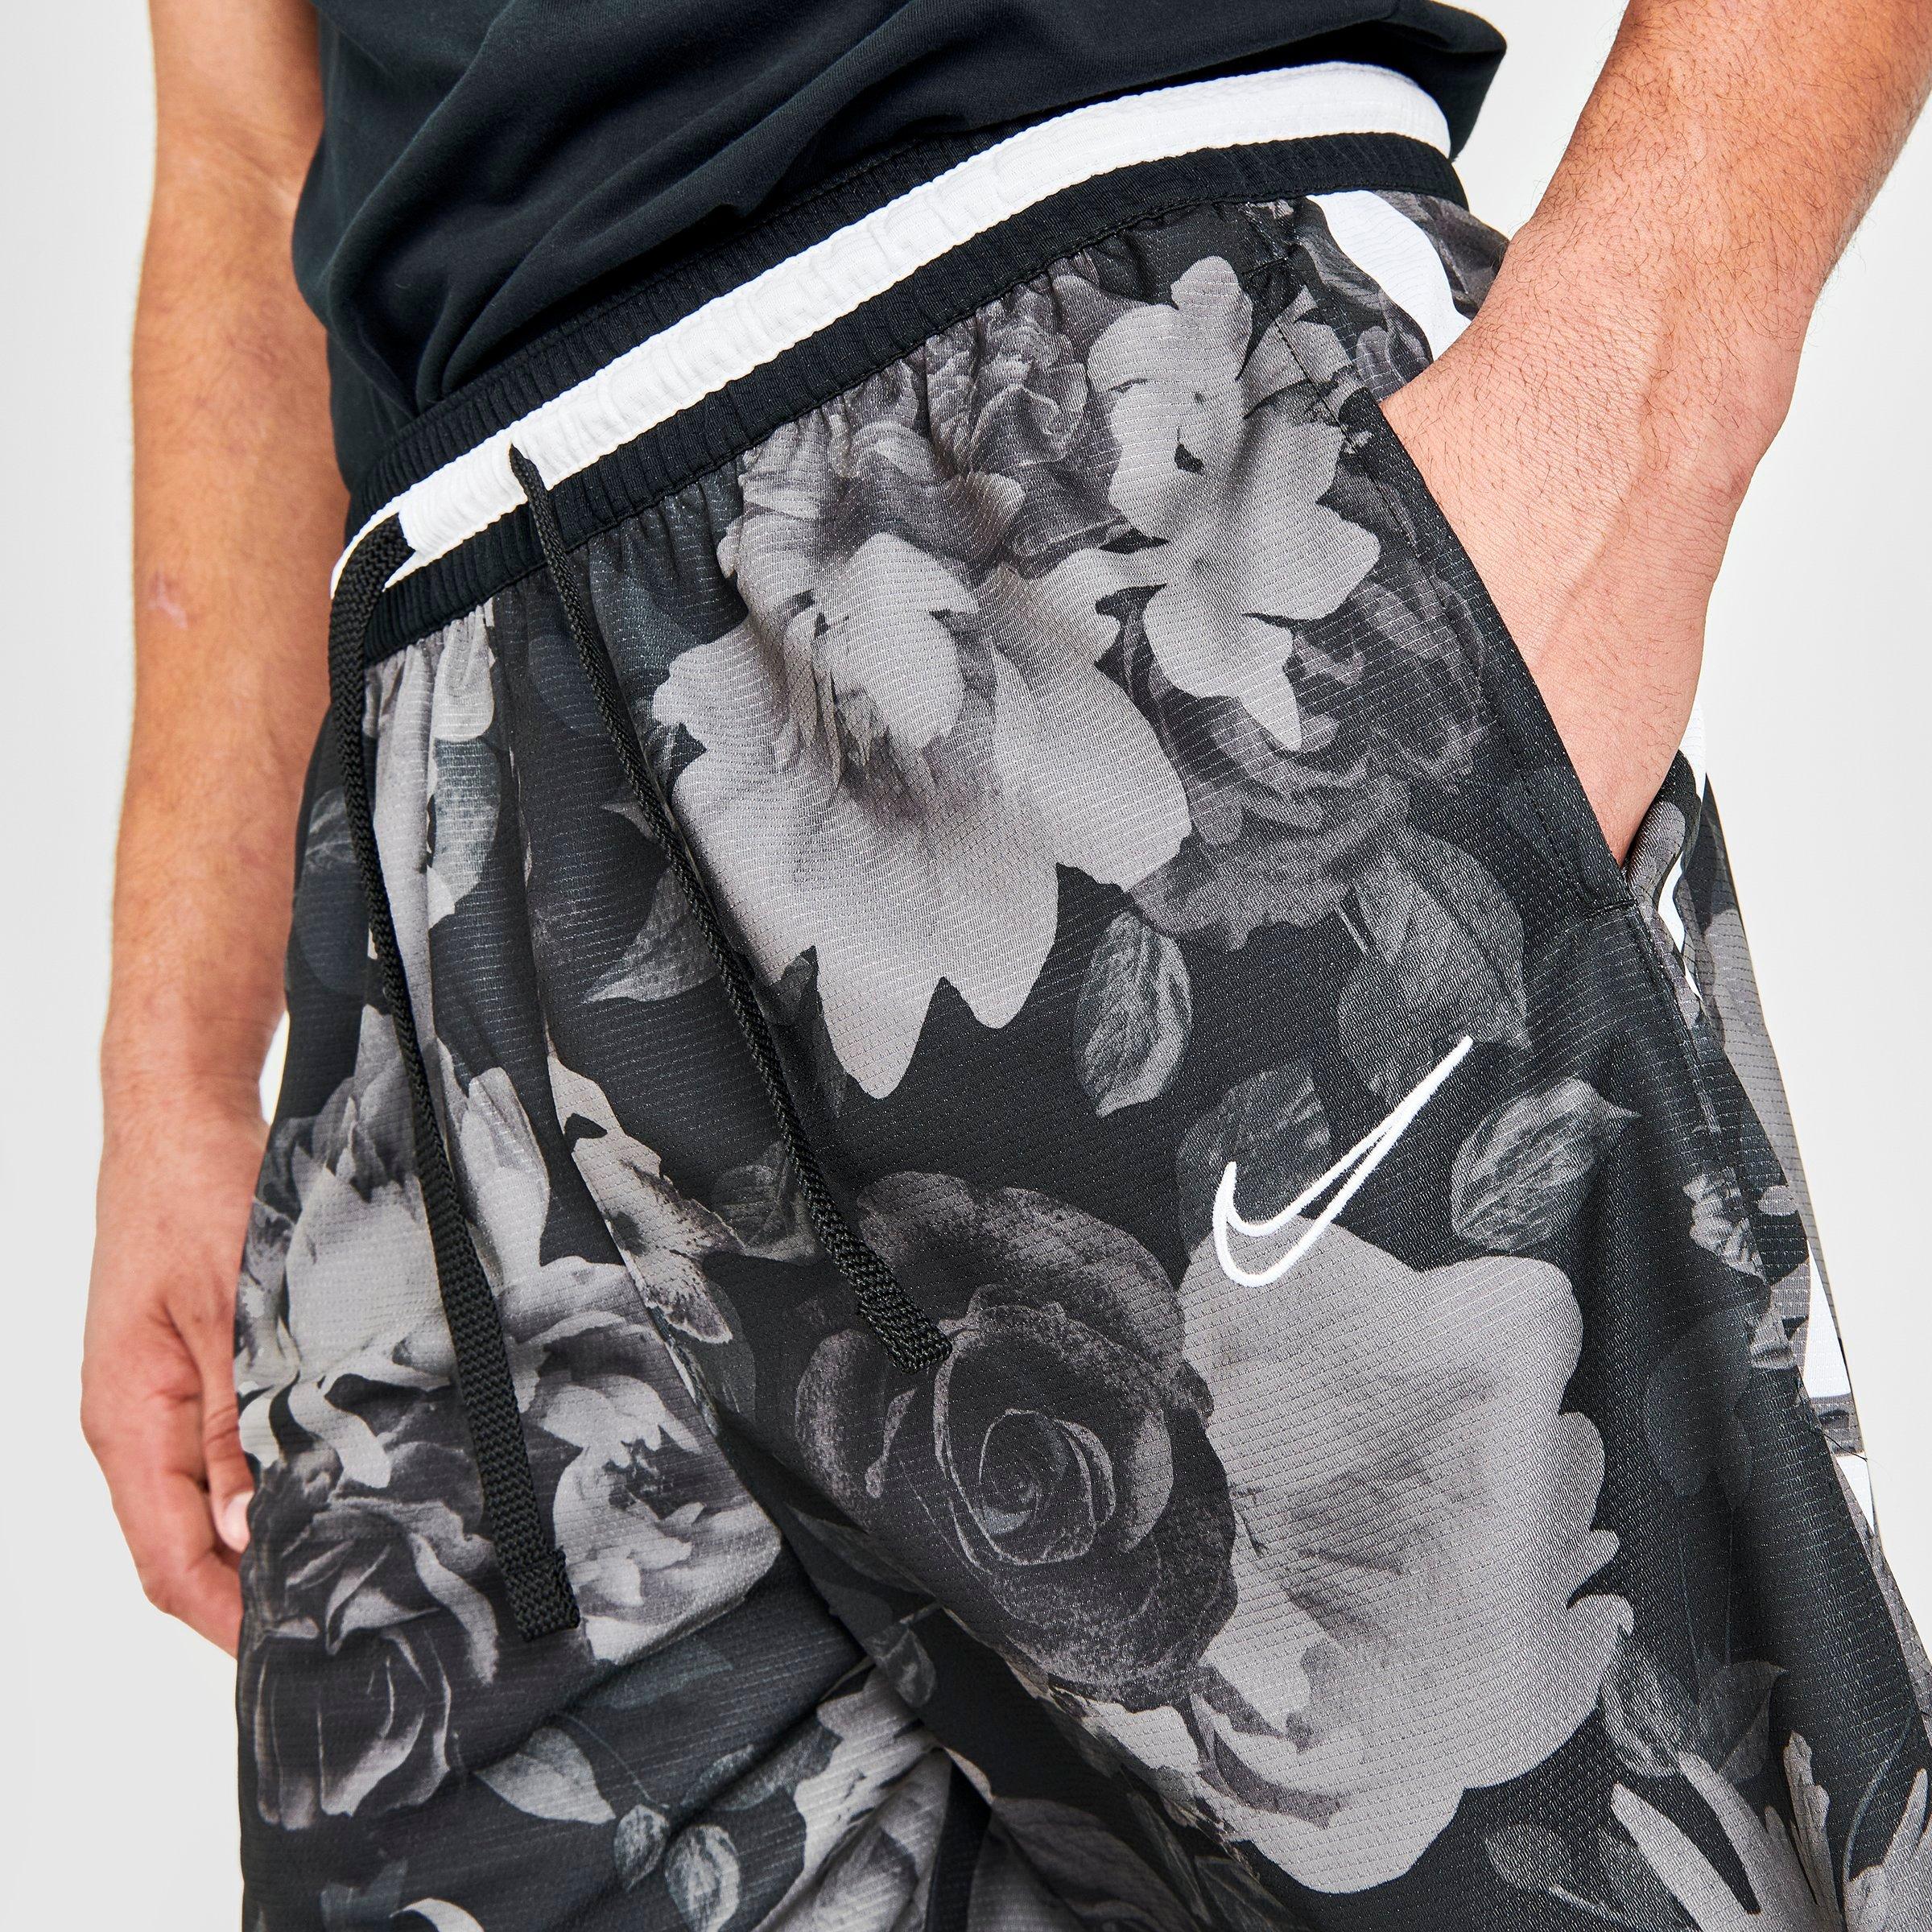 nike basketball shorts floral